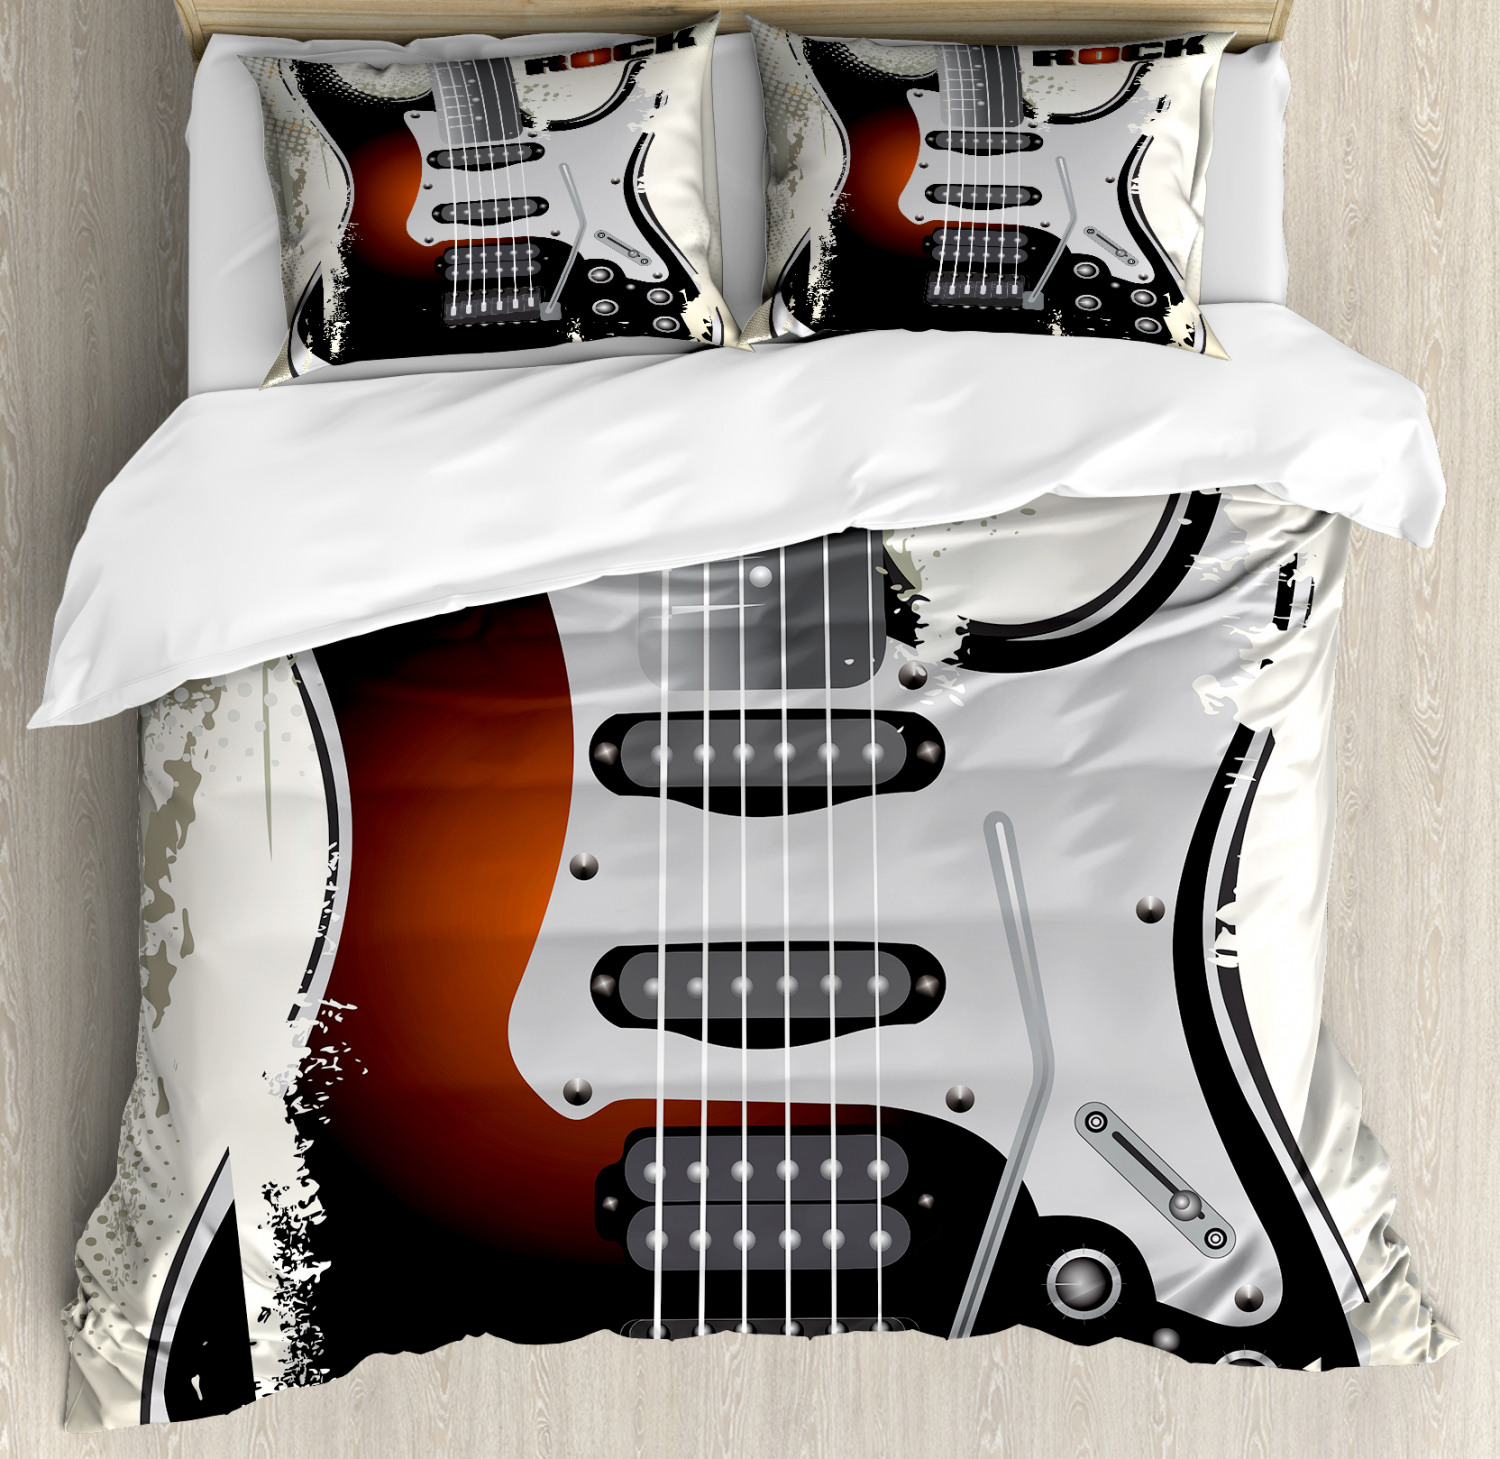 Rock Music Duvet Cover Set Twin Queen King Sizes With Pillow Shams Bedding Decor Ebay